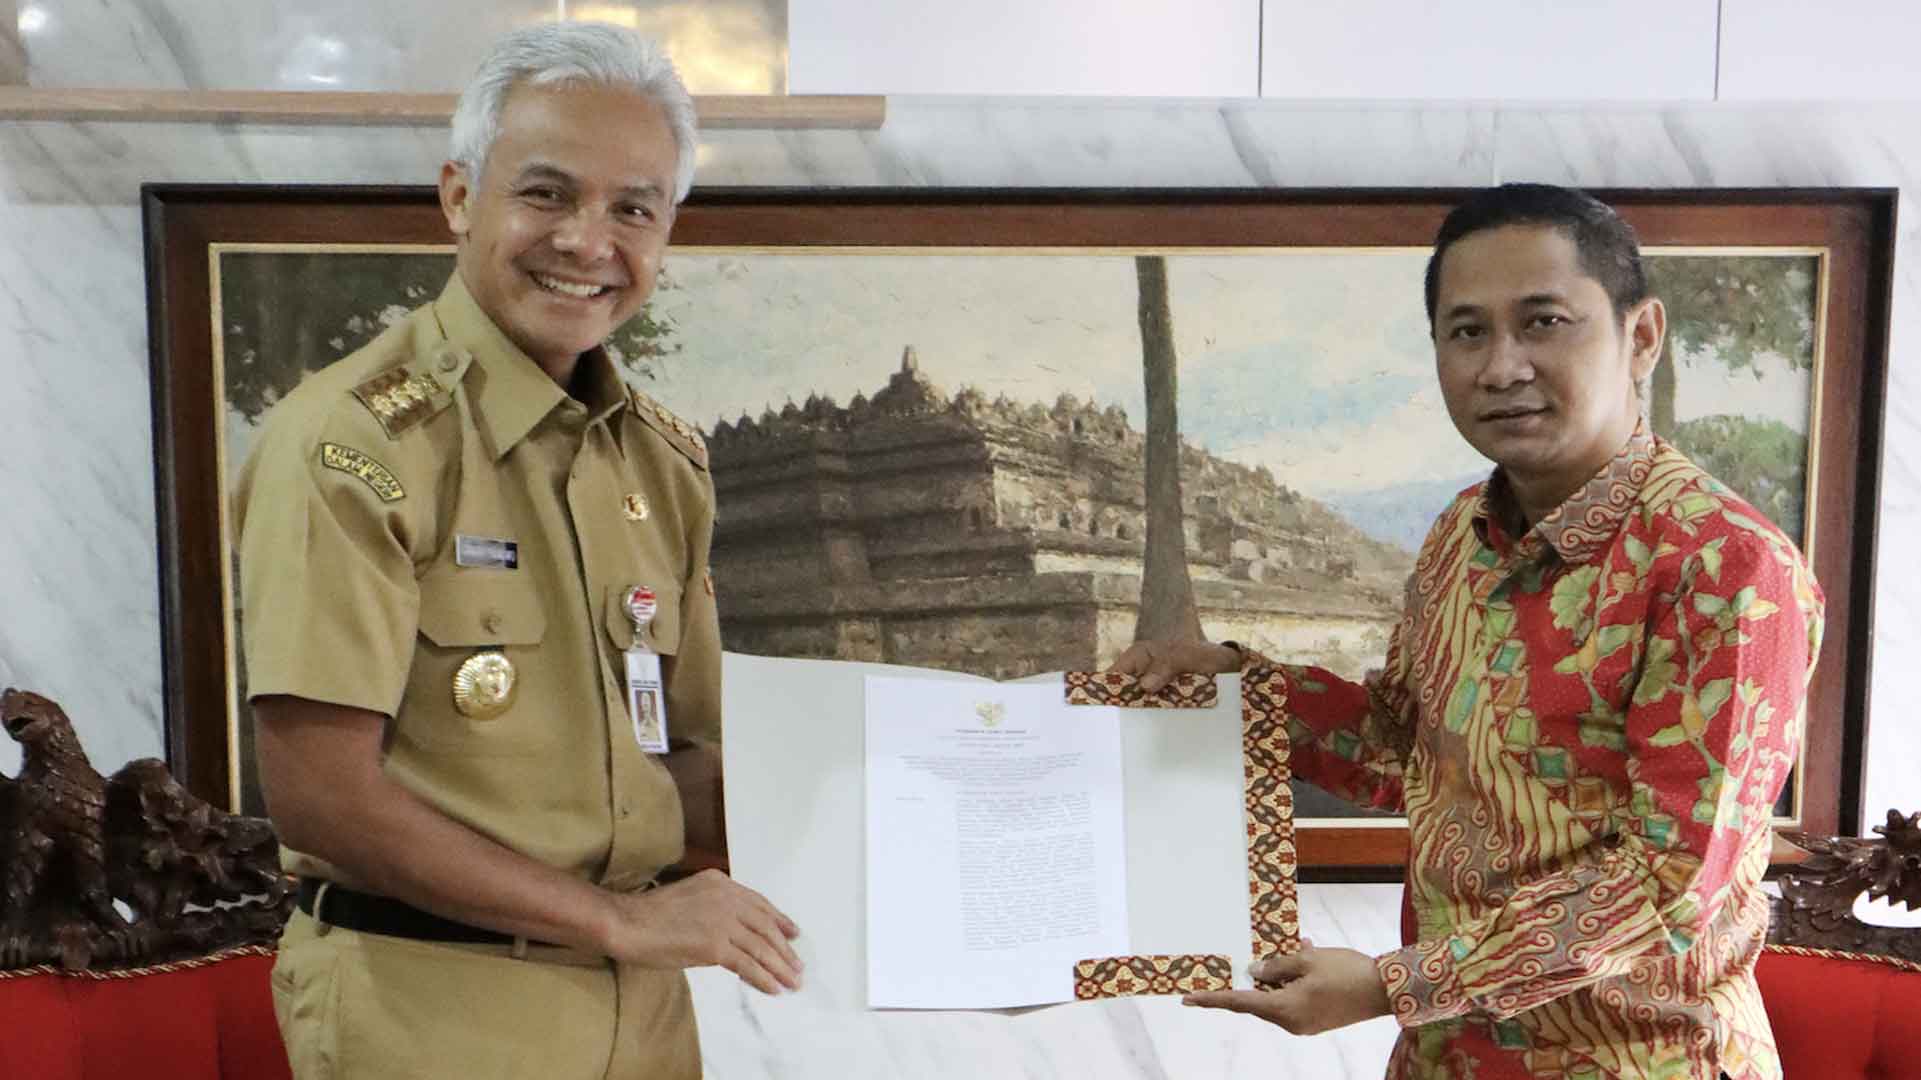 KY Terima Hibah Aset untuk Kantor Penghubung KY Jawa Tengah di Semarang